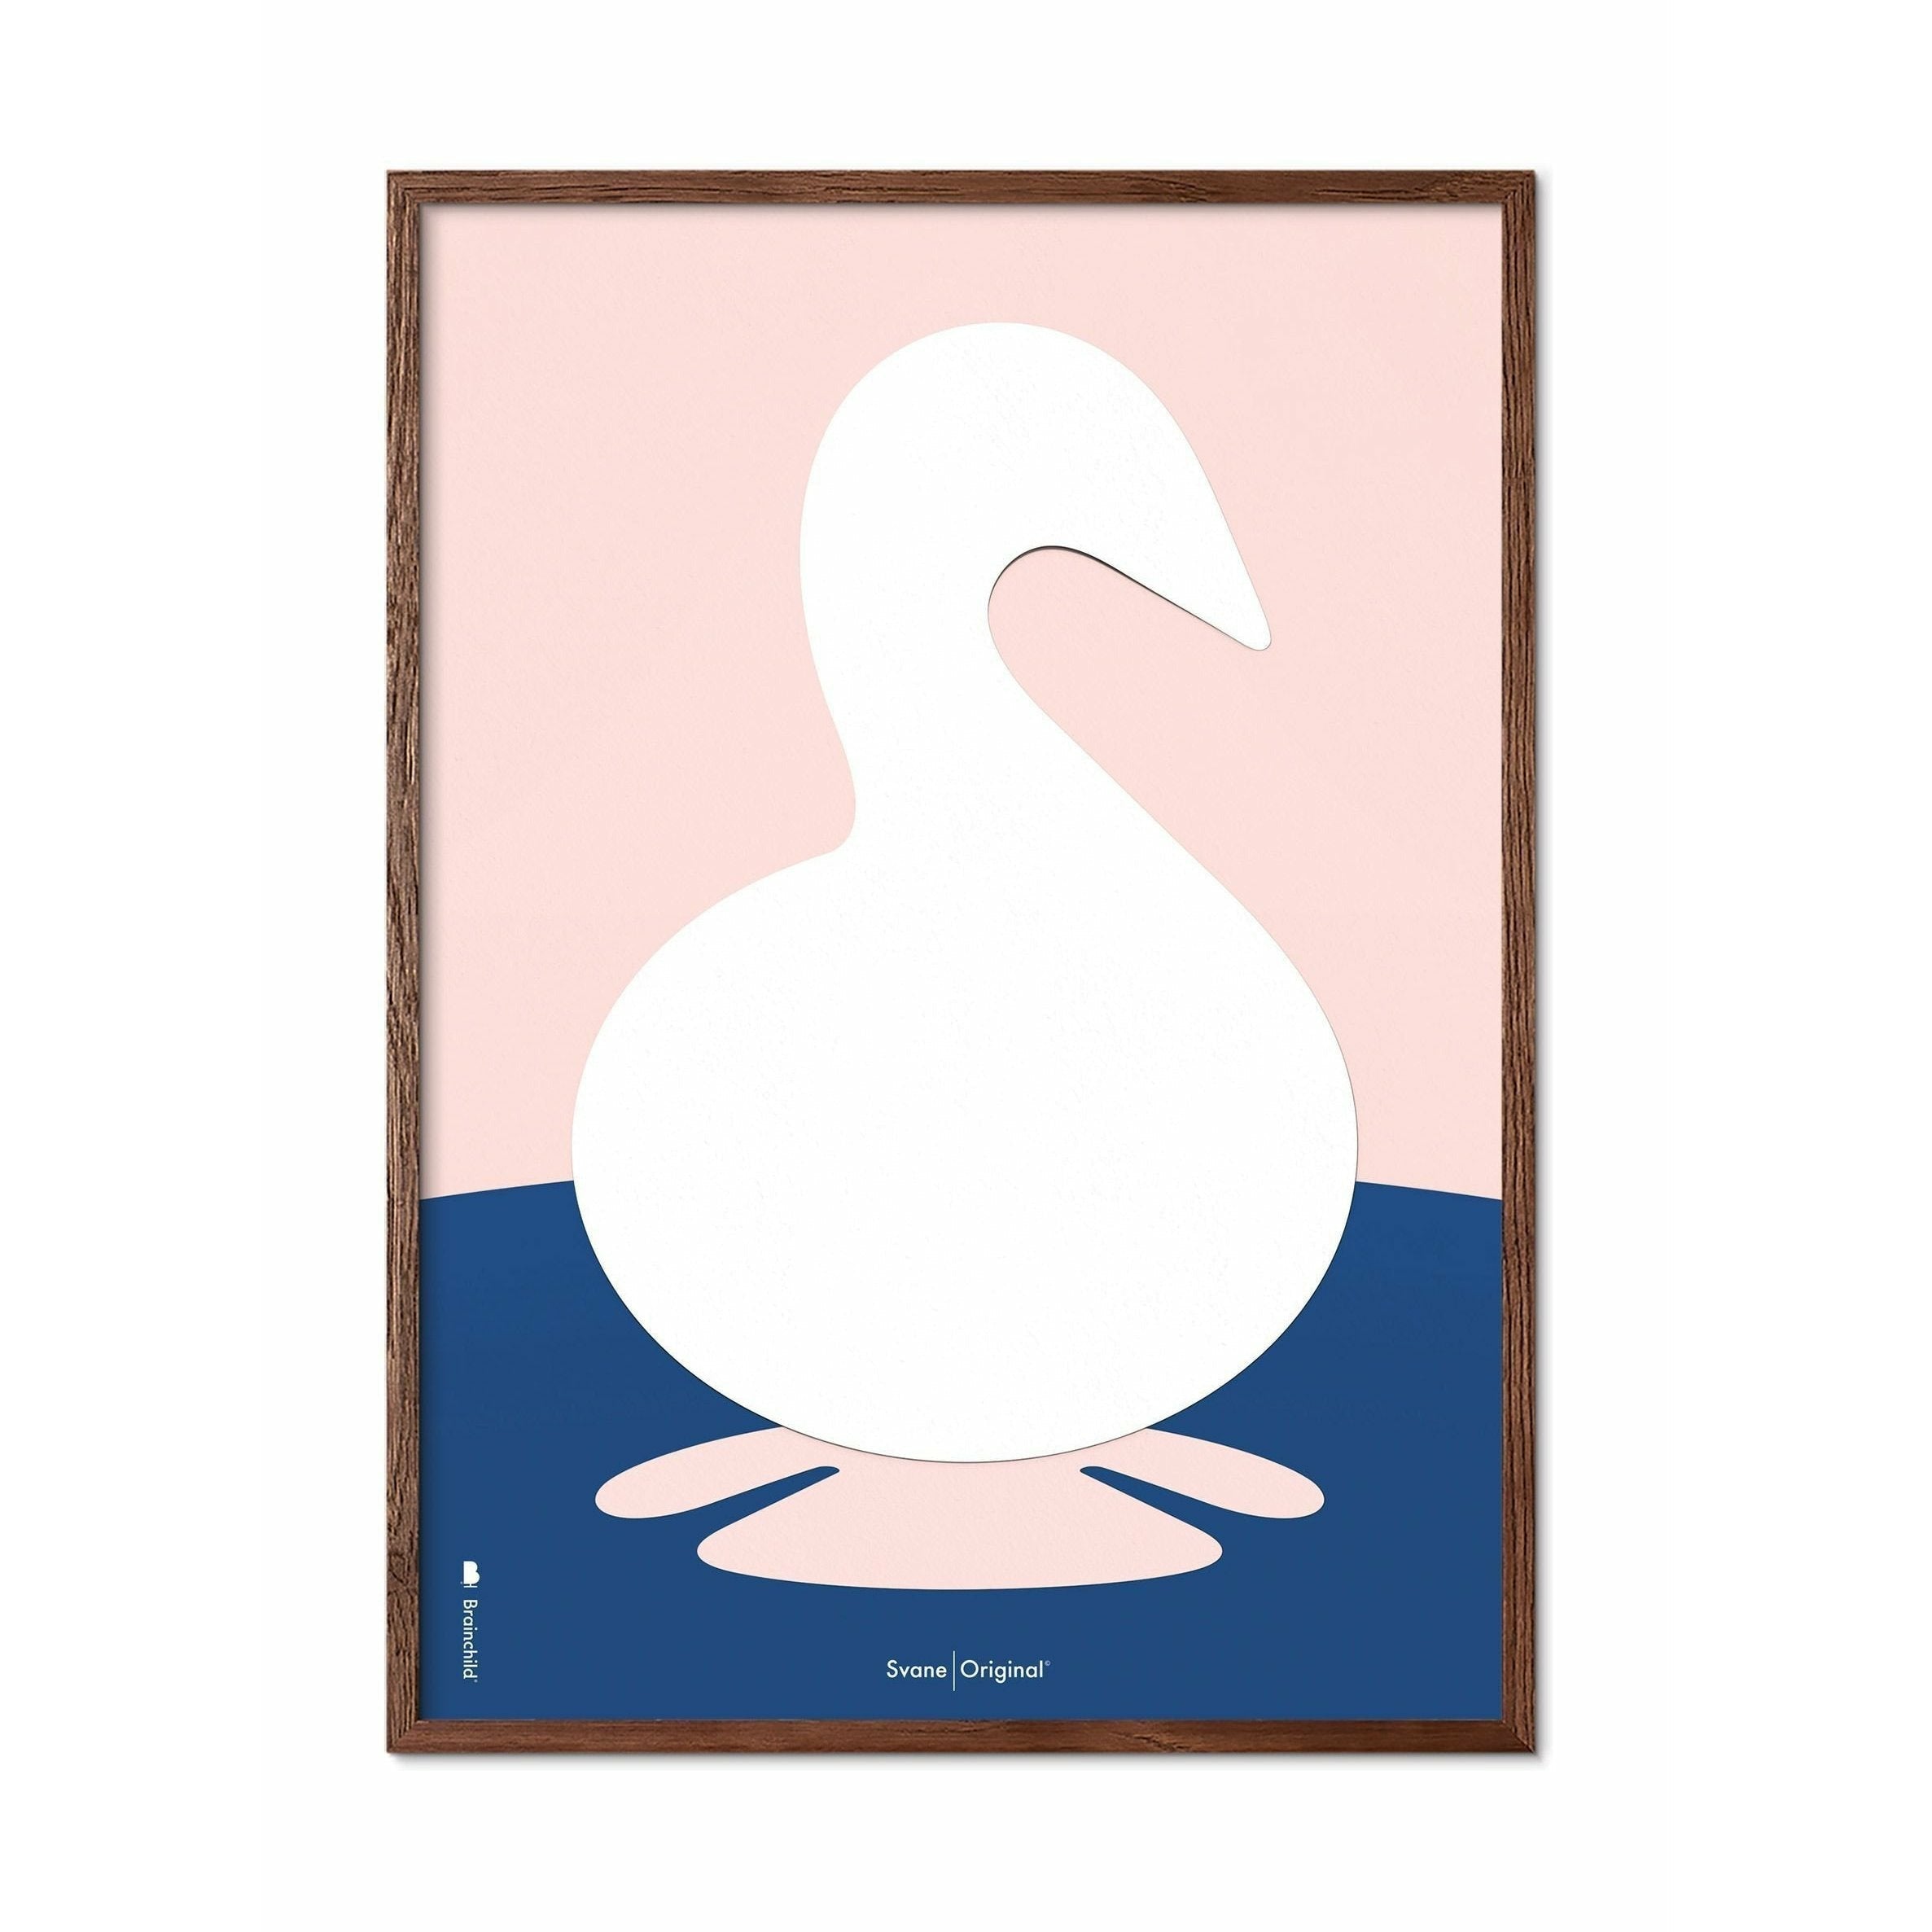 Plakát s labuťovou sponou s labuťovou sponou, rám vyrobený z tmavého dřeva 30x40 cm, růžové pozadí